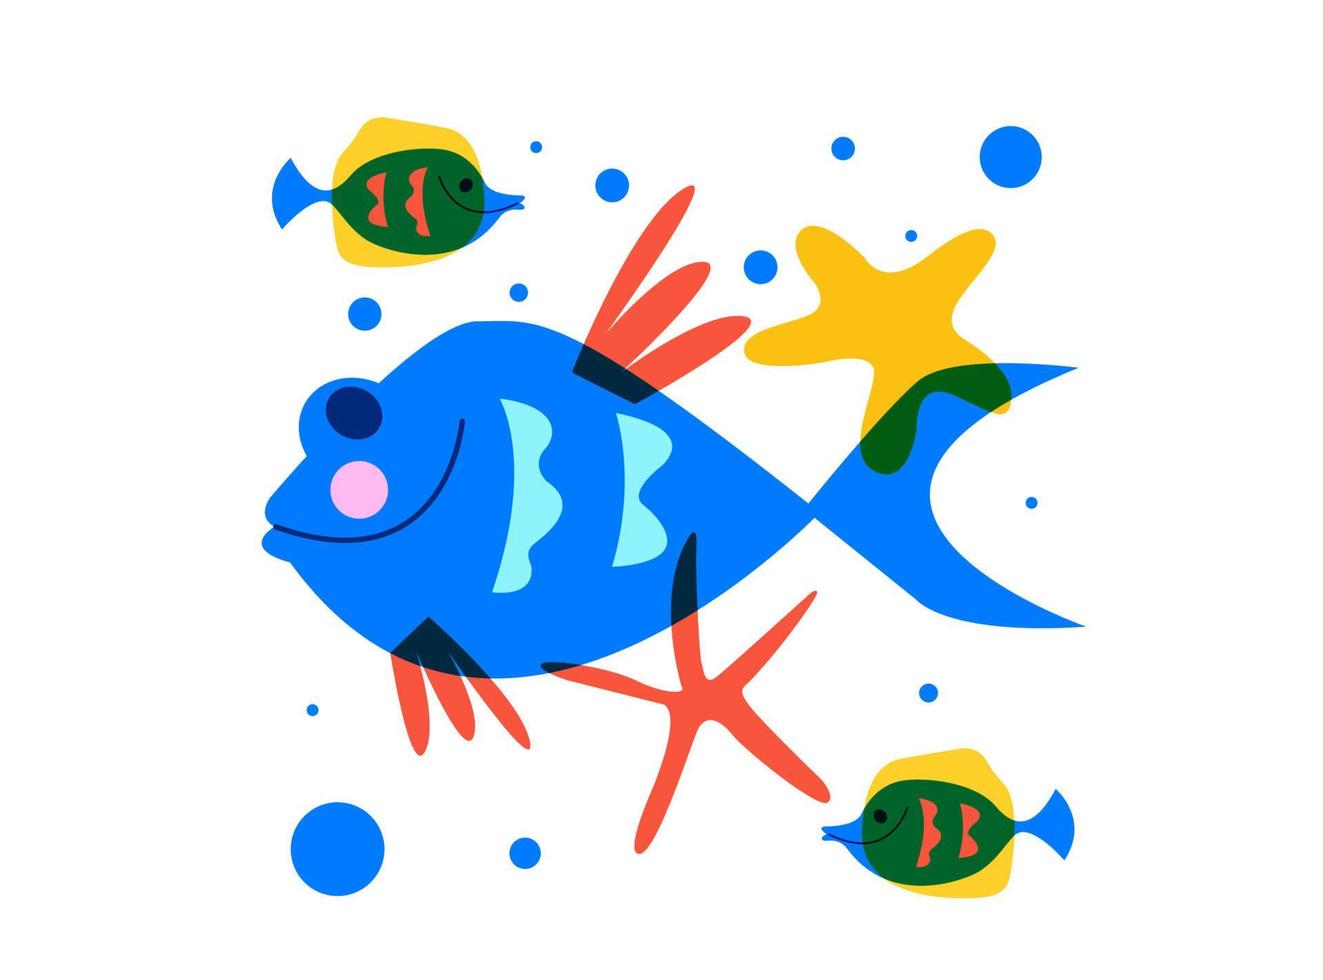 pez tropical. vida marina, mundo submarino, peces de acuario. ilustración vectorial sobre un fondo blanco. vector